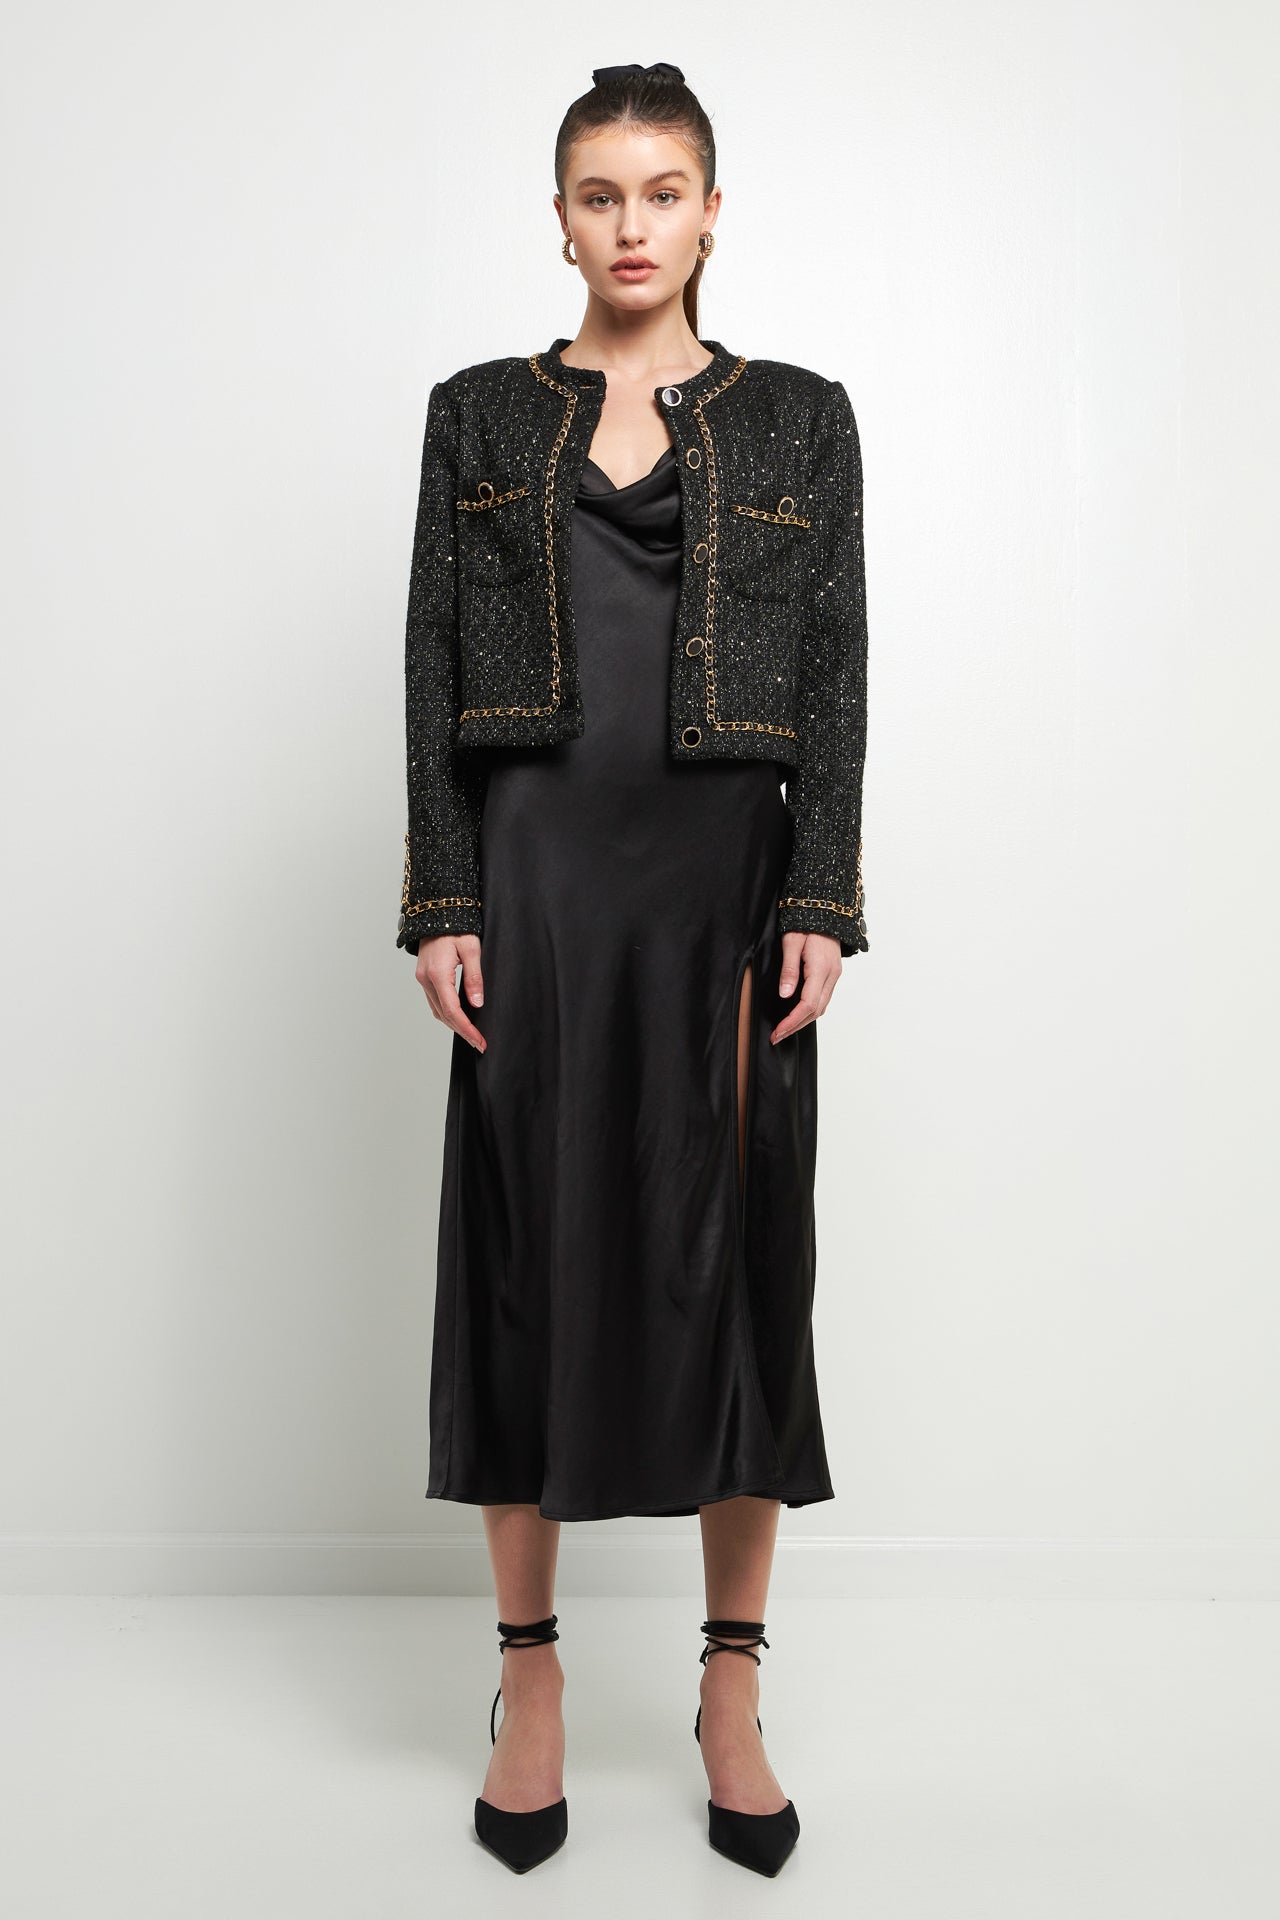 Chanel Tweed Mini Dress - 8 For Sale on 1stDibs